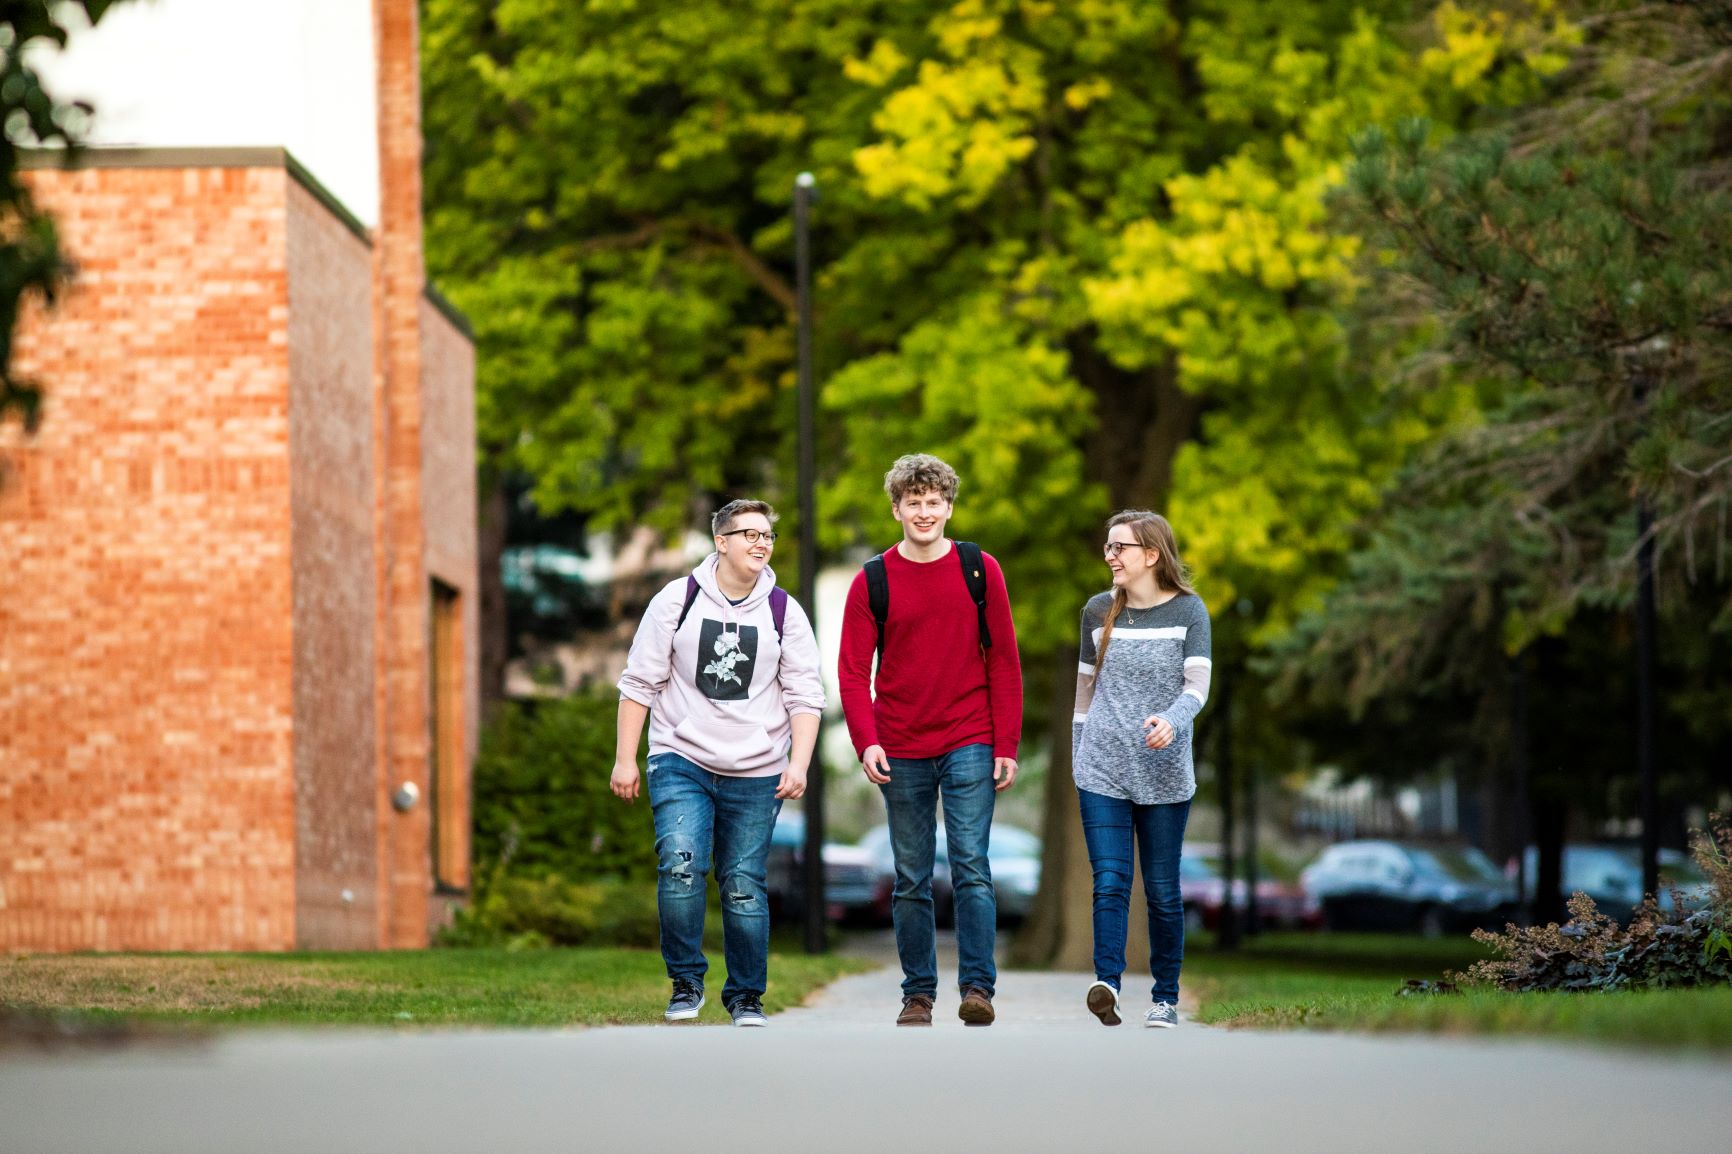 DSU students walking on campus